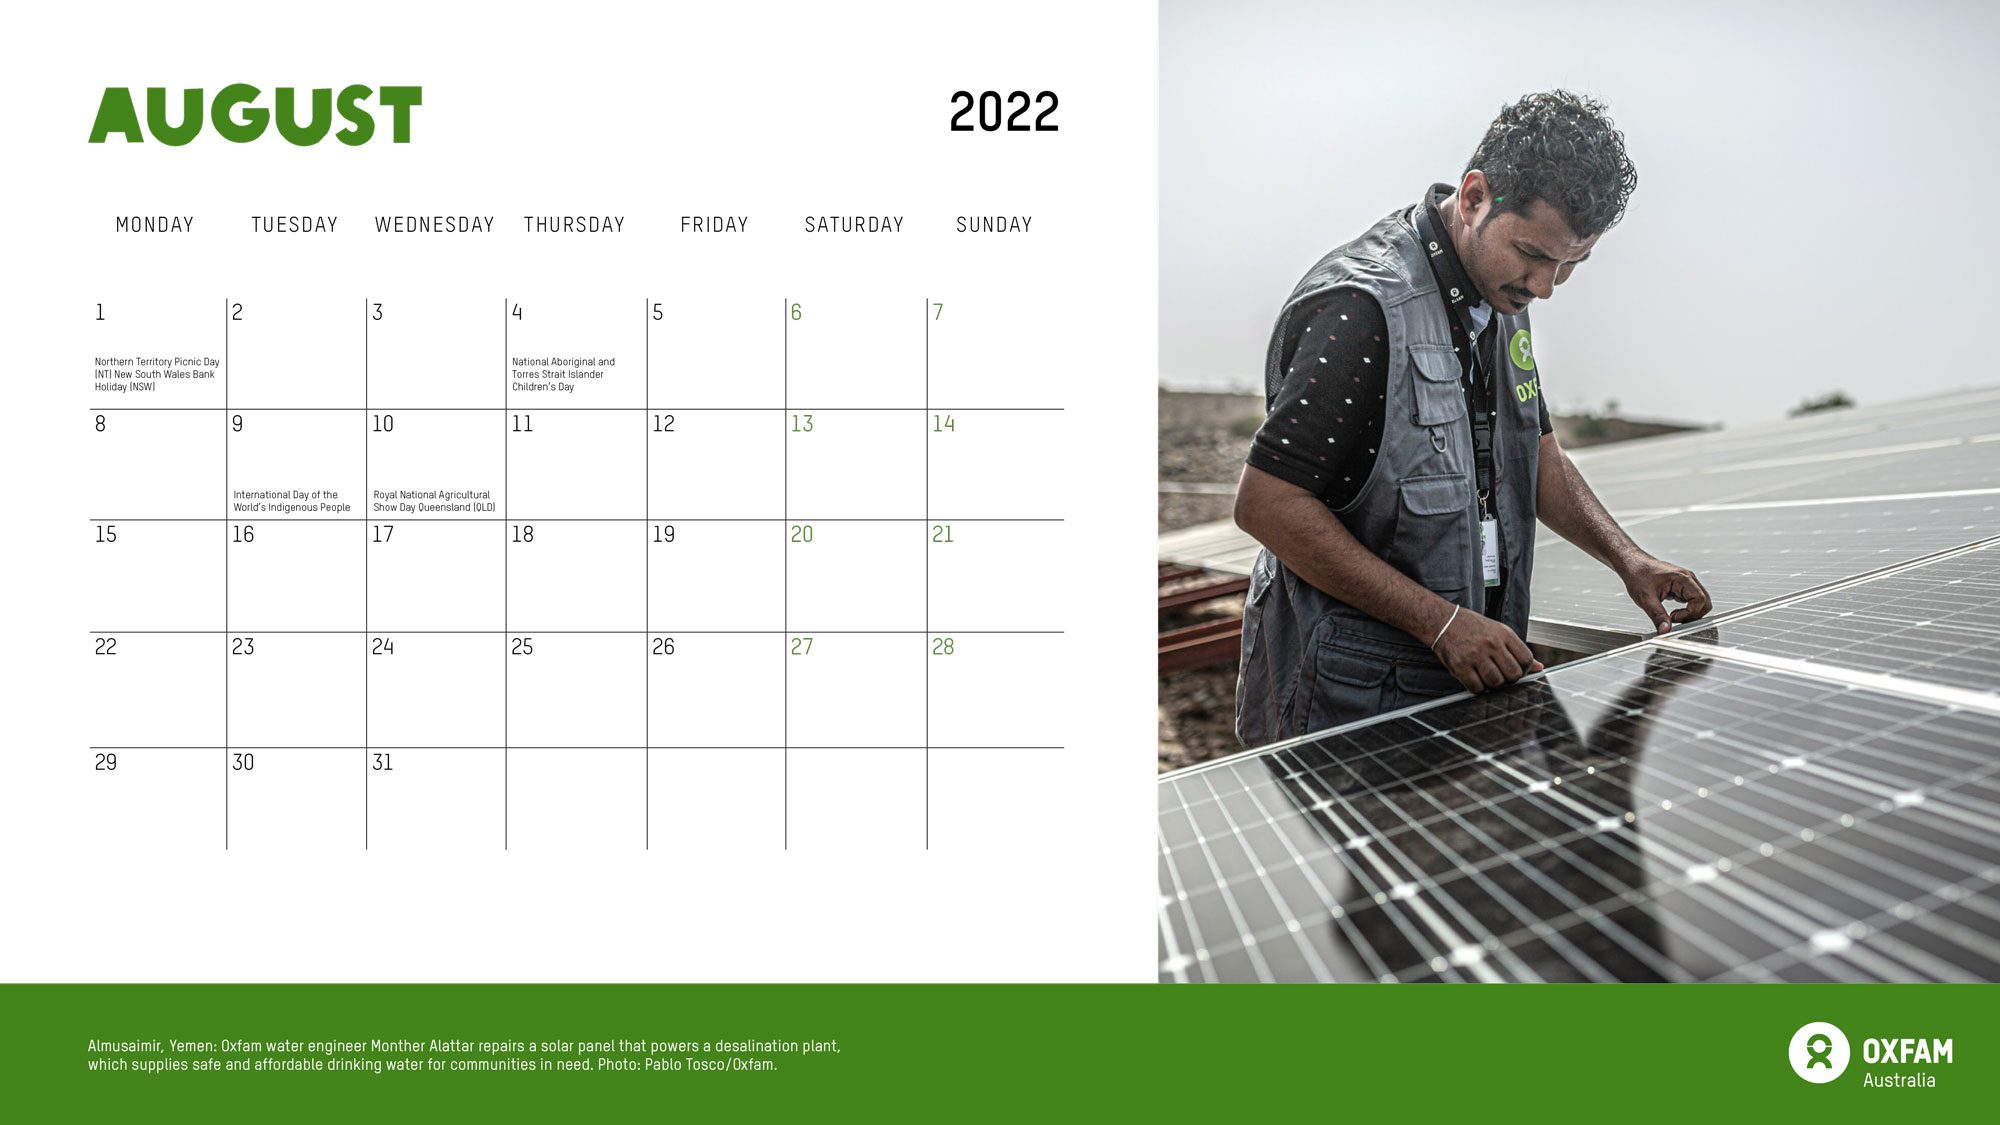 Oxfam calendar 2022 August